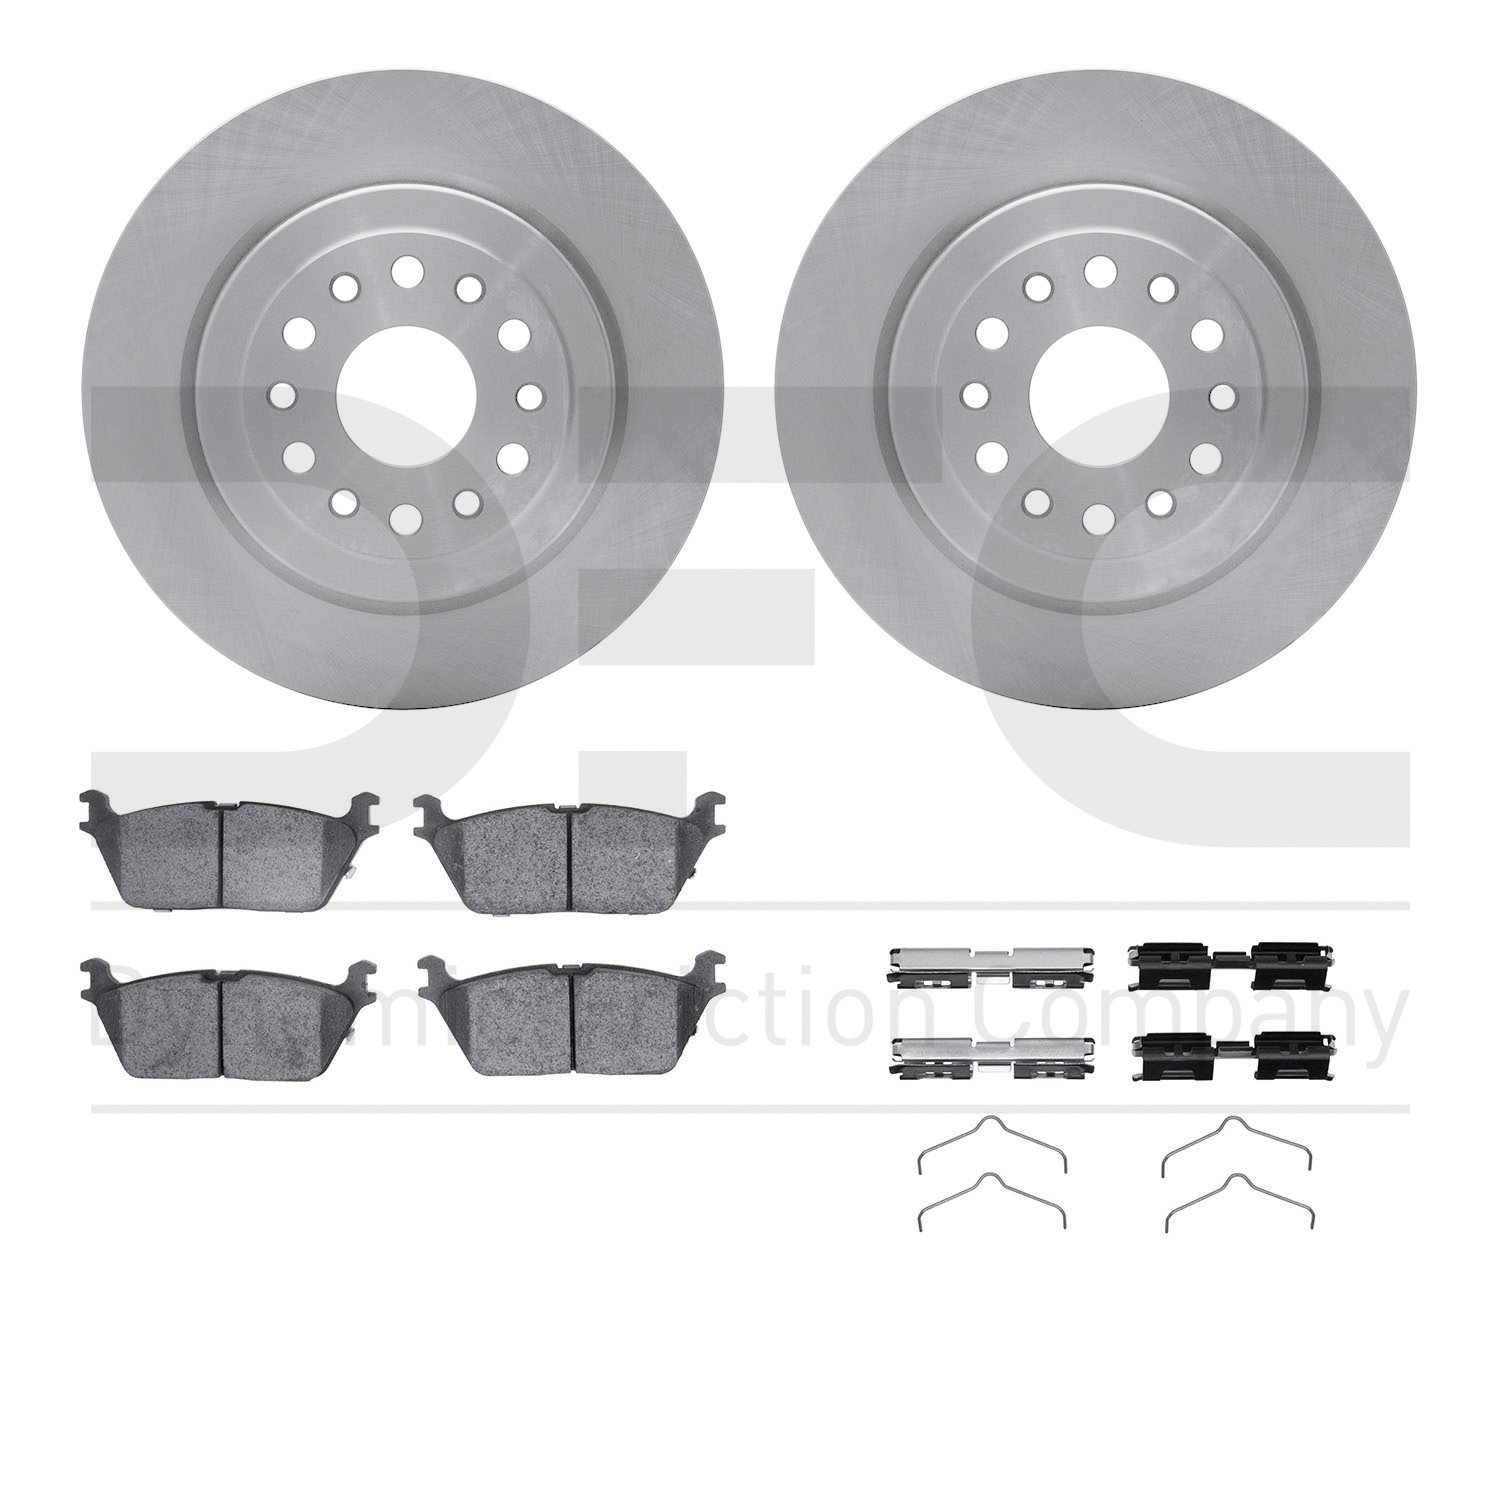 6412-40076 Brake Rotors with Ultimate-Duty Brake Pads Kit & Hardware, Fits Select Mopar, Position: Rear